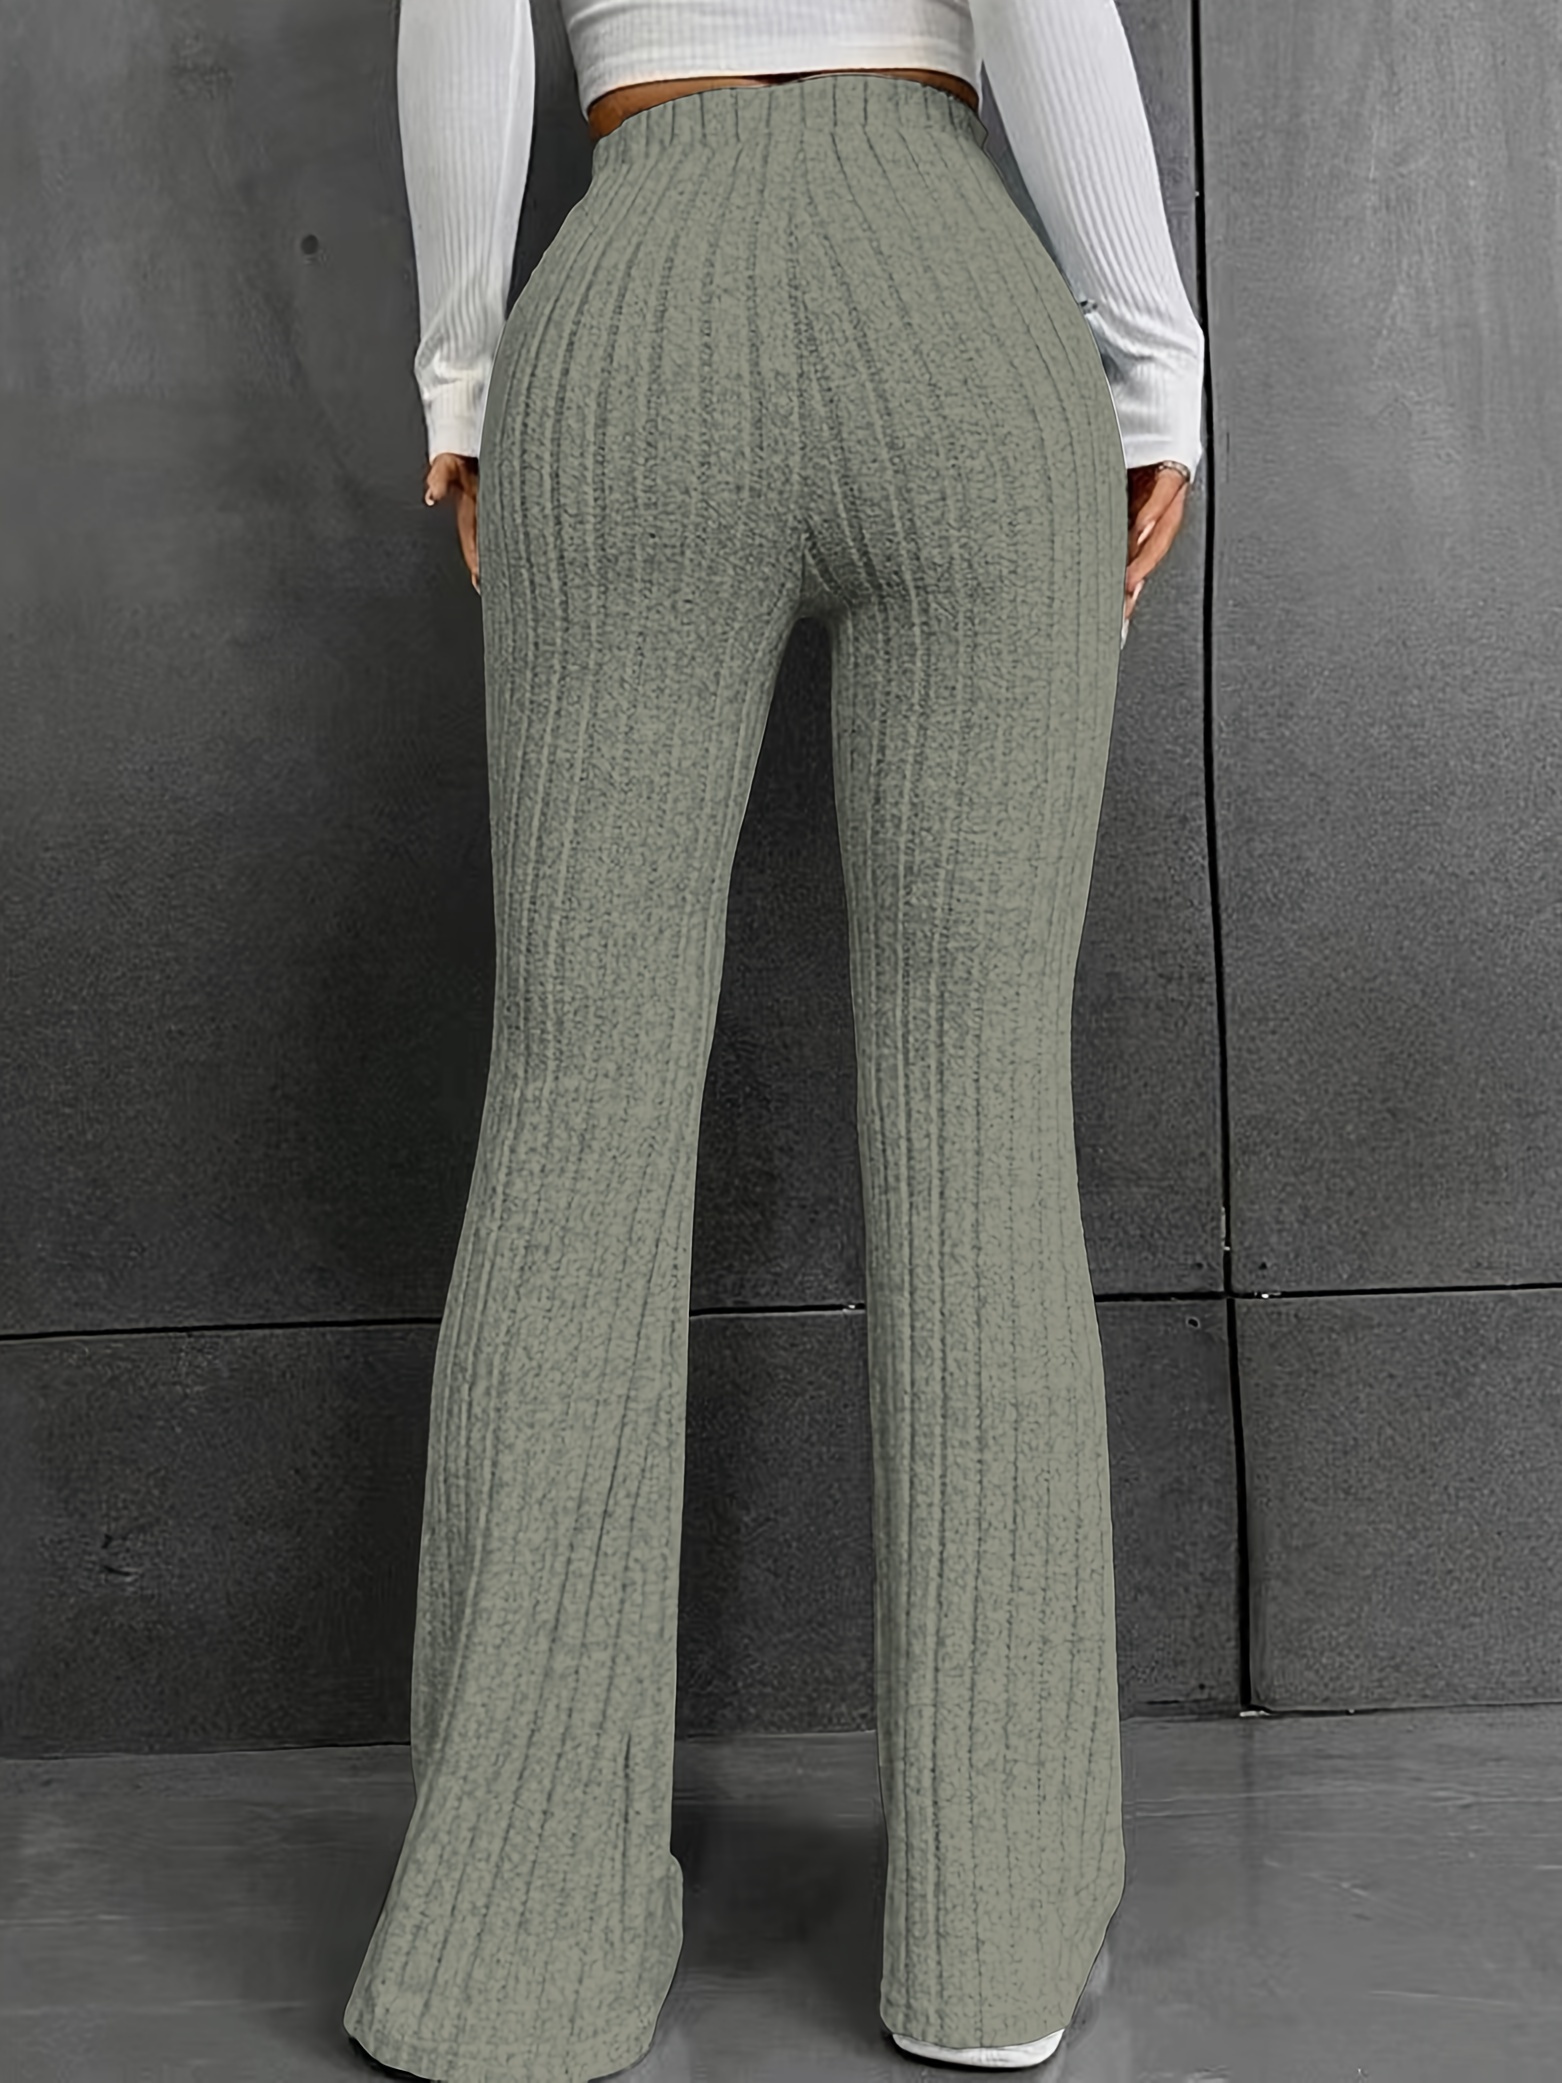 ADAGRO Womens Slacks Solid Rib Knit Flare Leg Pants (Color